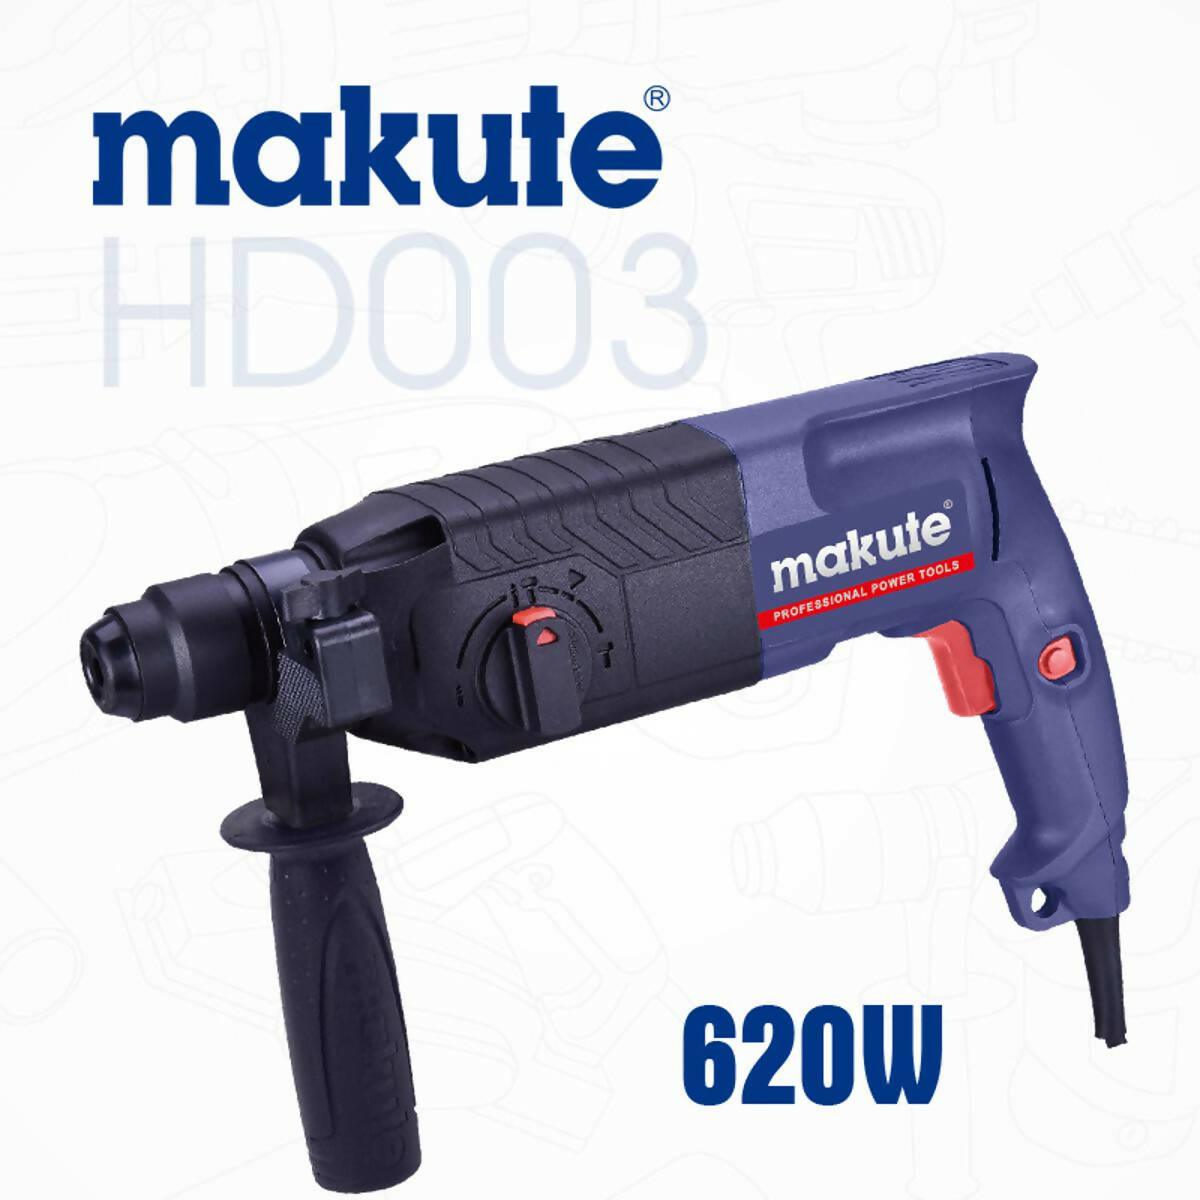 Makute Hd003 24mm Hilti Drill 620watts - 100% Copper